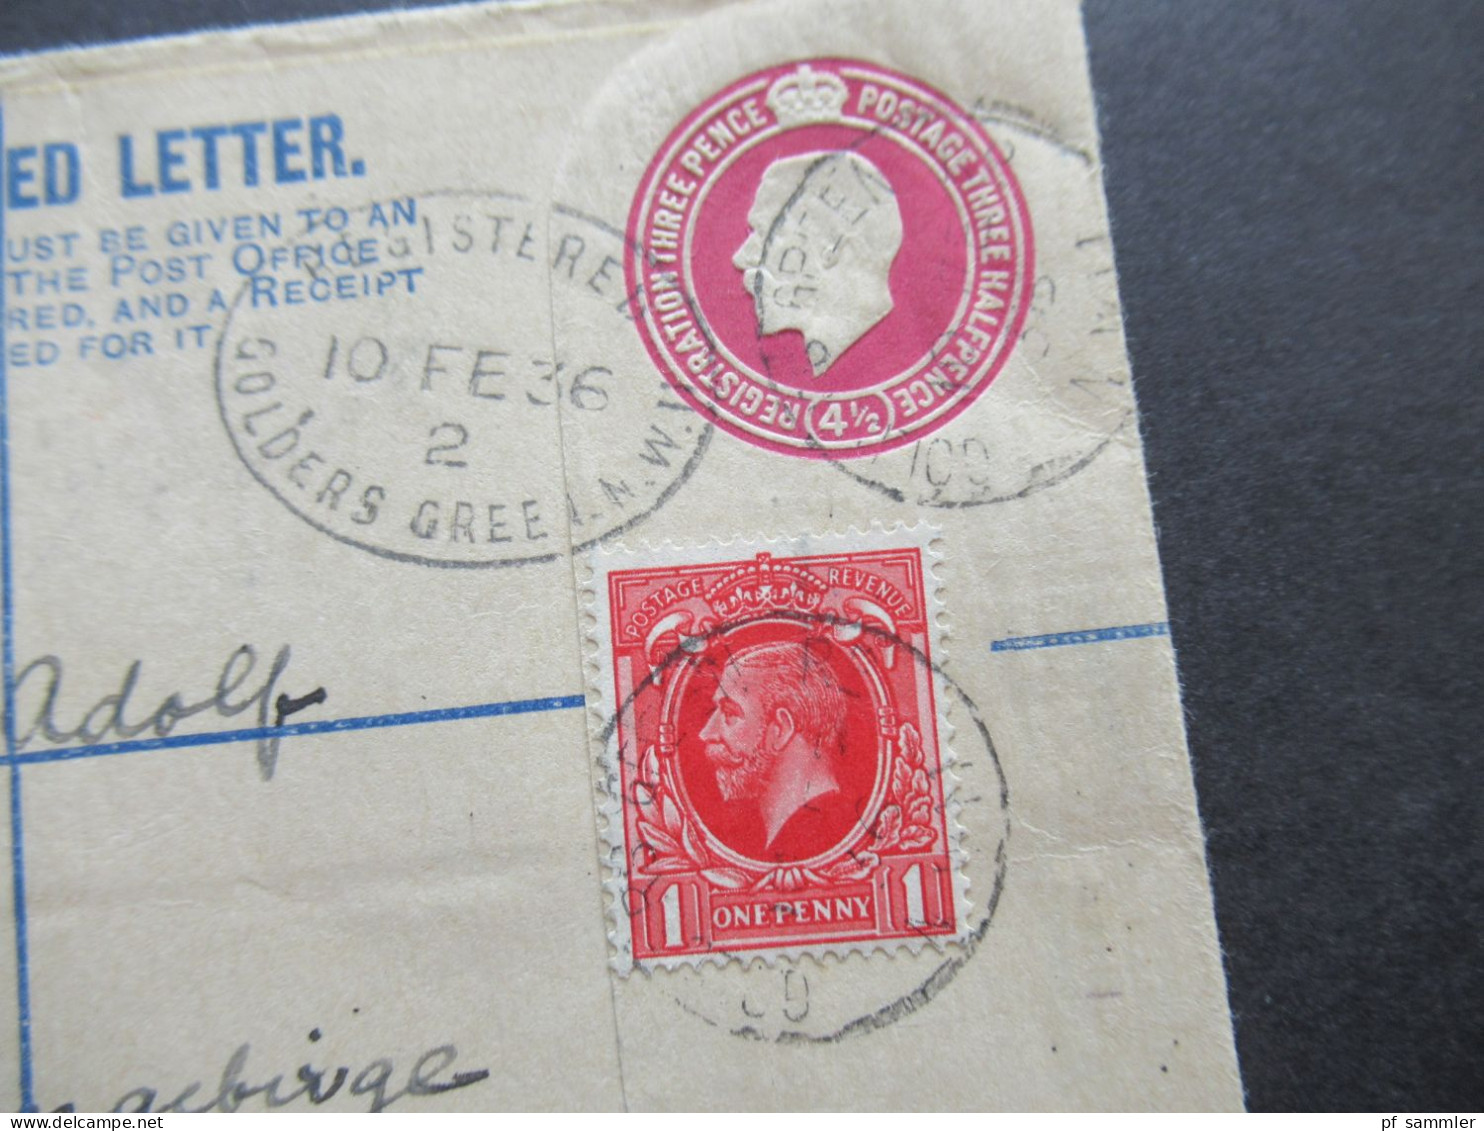 GB 1936 GA Umschlag Registered Letter / Registered Golders Green 5 Nach Petzer Riesengebrge CSR Mit Ank. Stempel - Briefe U. Dokumente